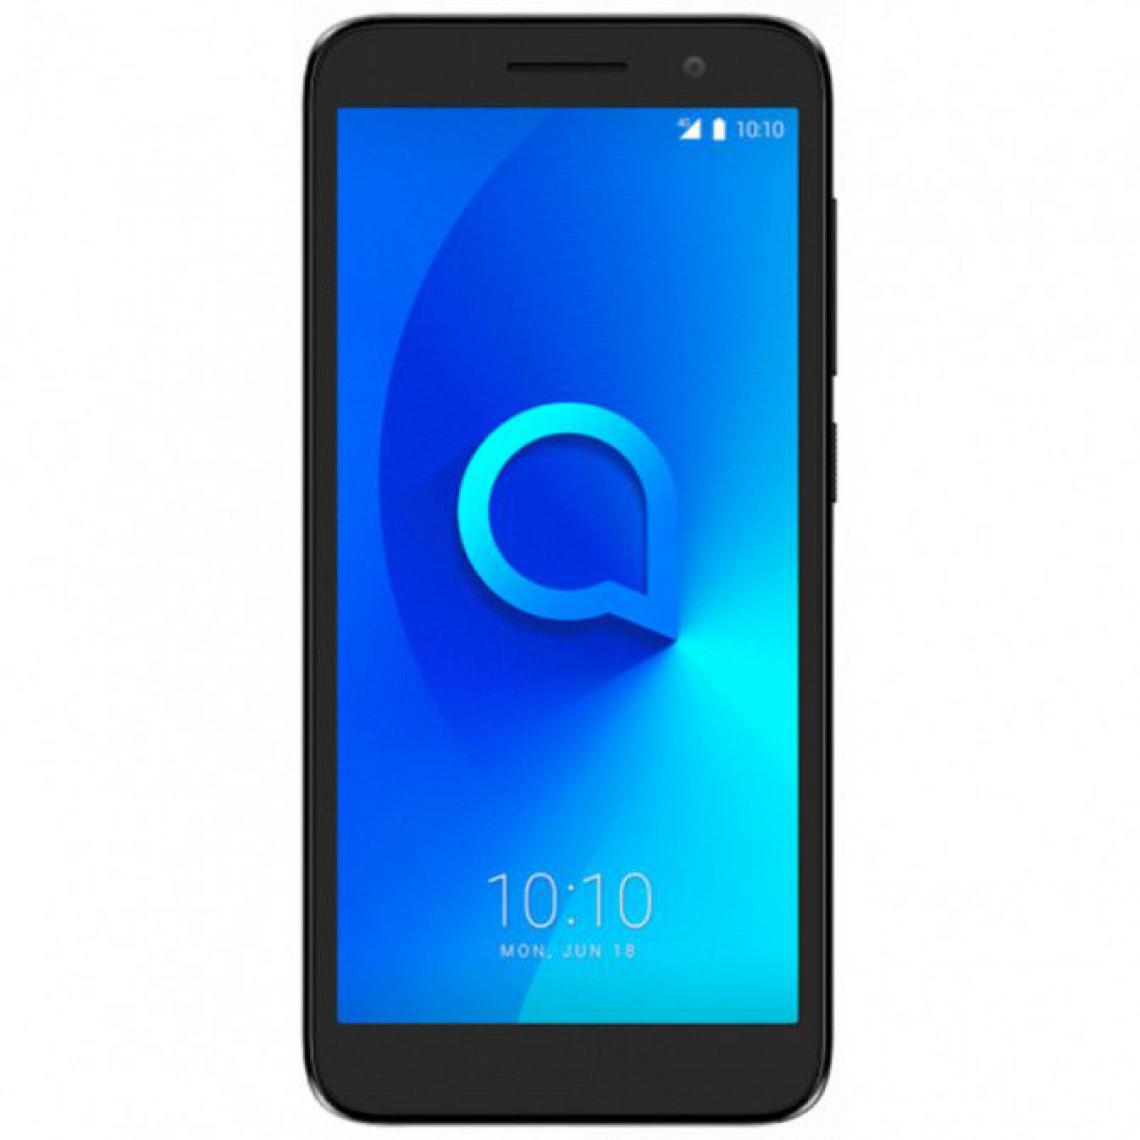 Alcatel - Alcatel 1 1Go/8Go Noir Double SIM 5033D - Smartphone Android